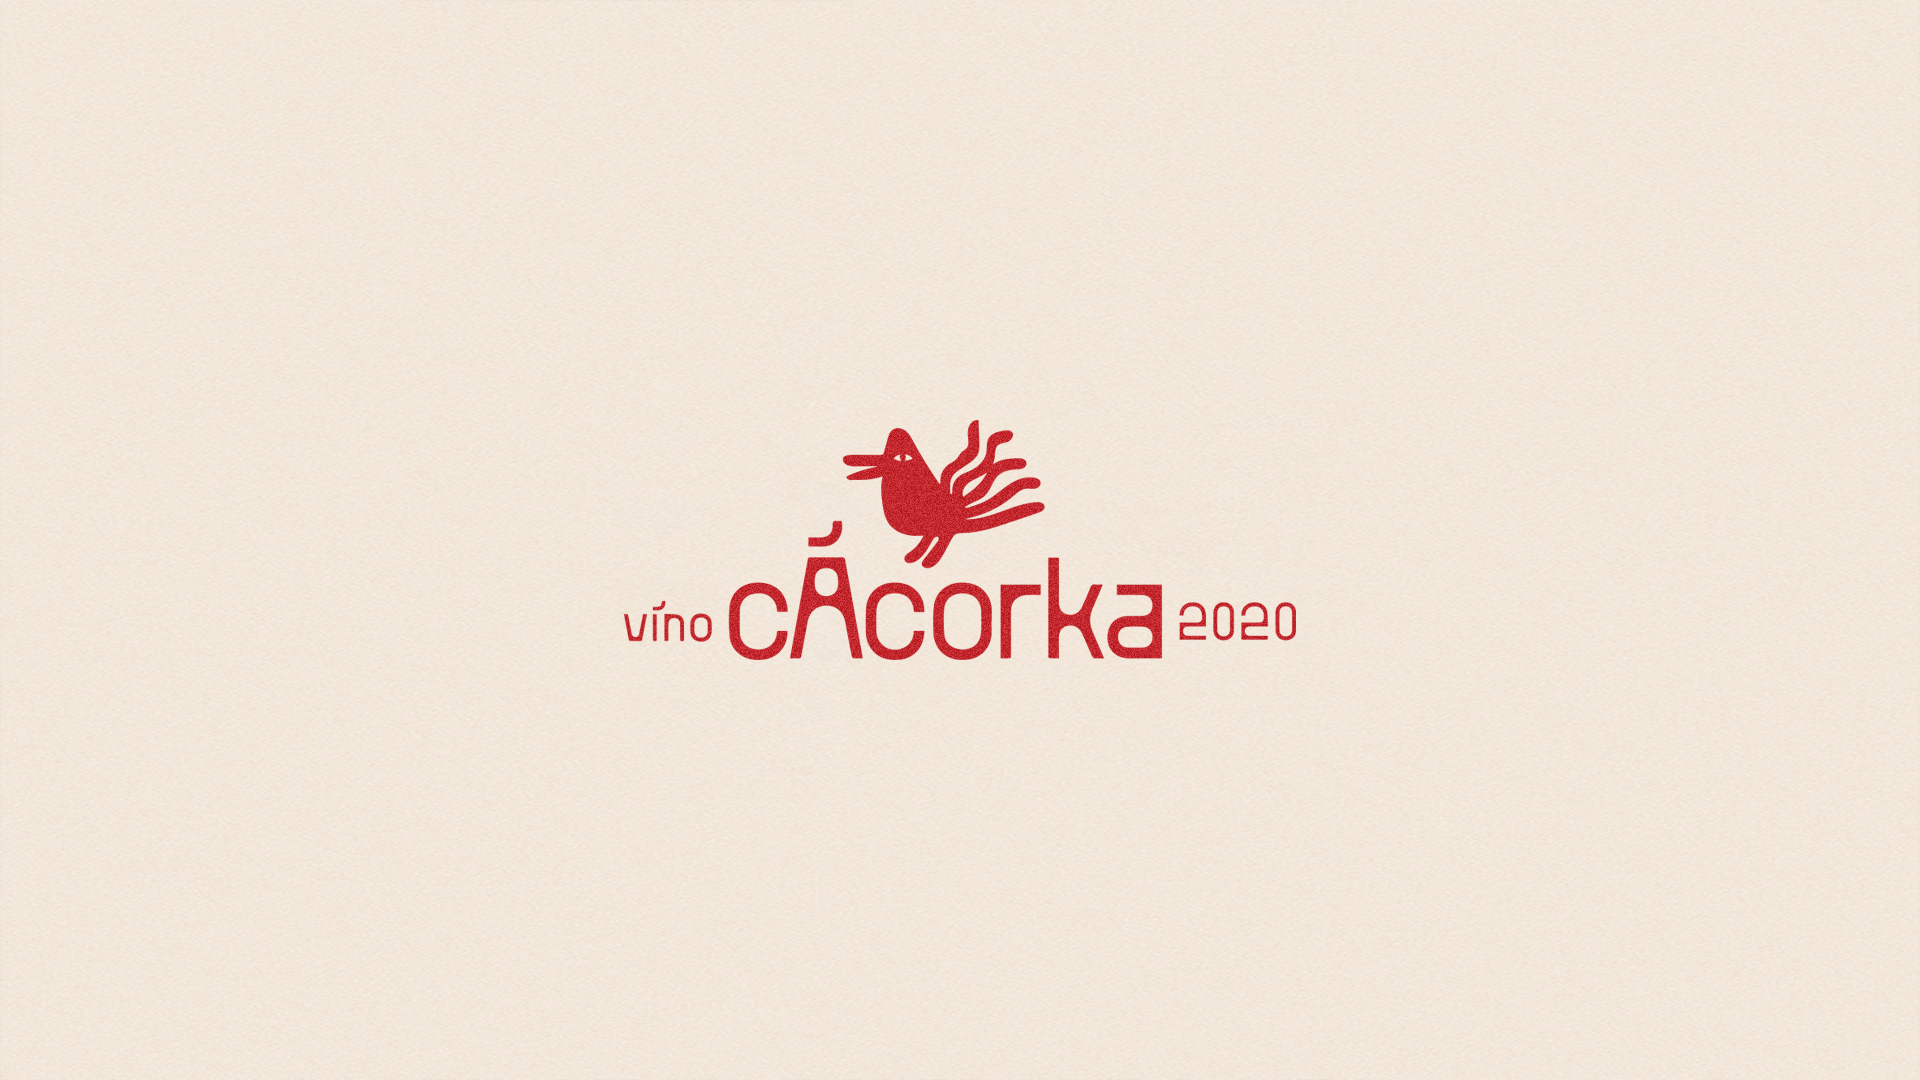 Cacorka_logo